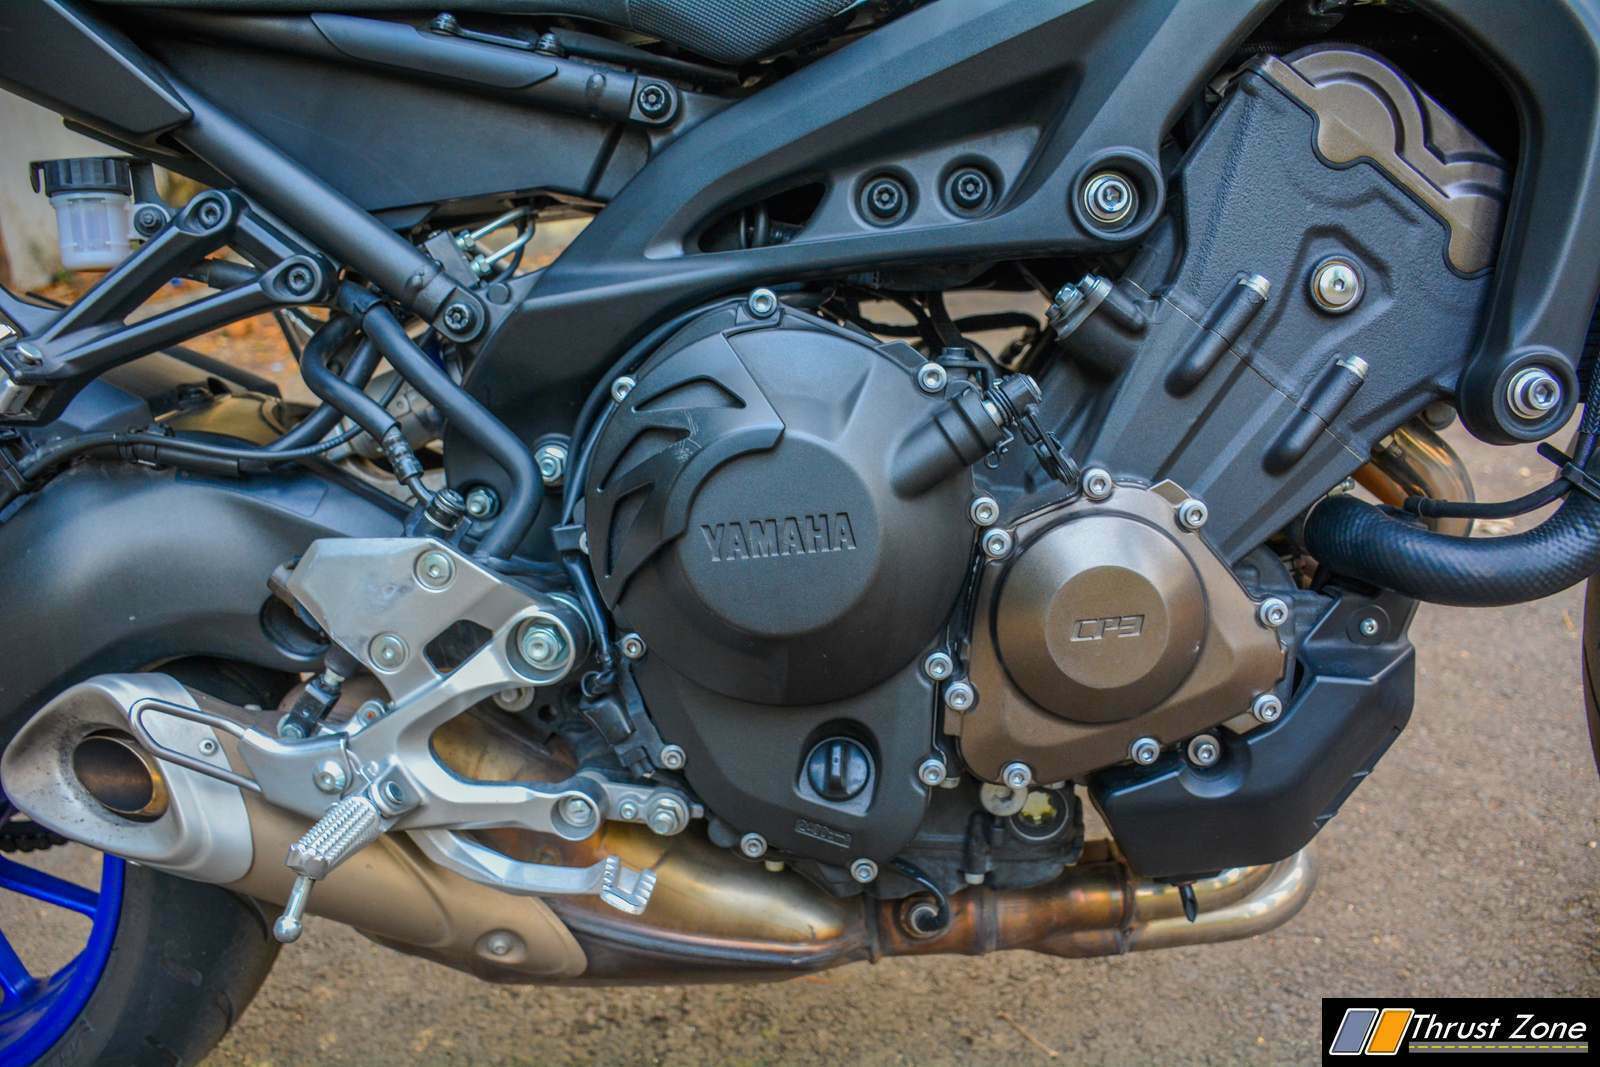 https://www.thrustzone.com/wp-content/uploads/2017/11/Yamaha-MT-09-India-Ride-Review-9.jpg